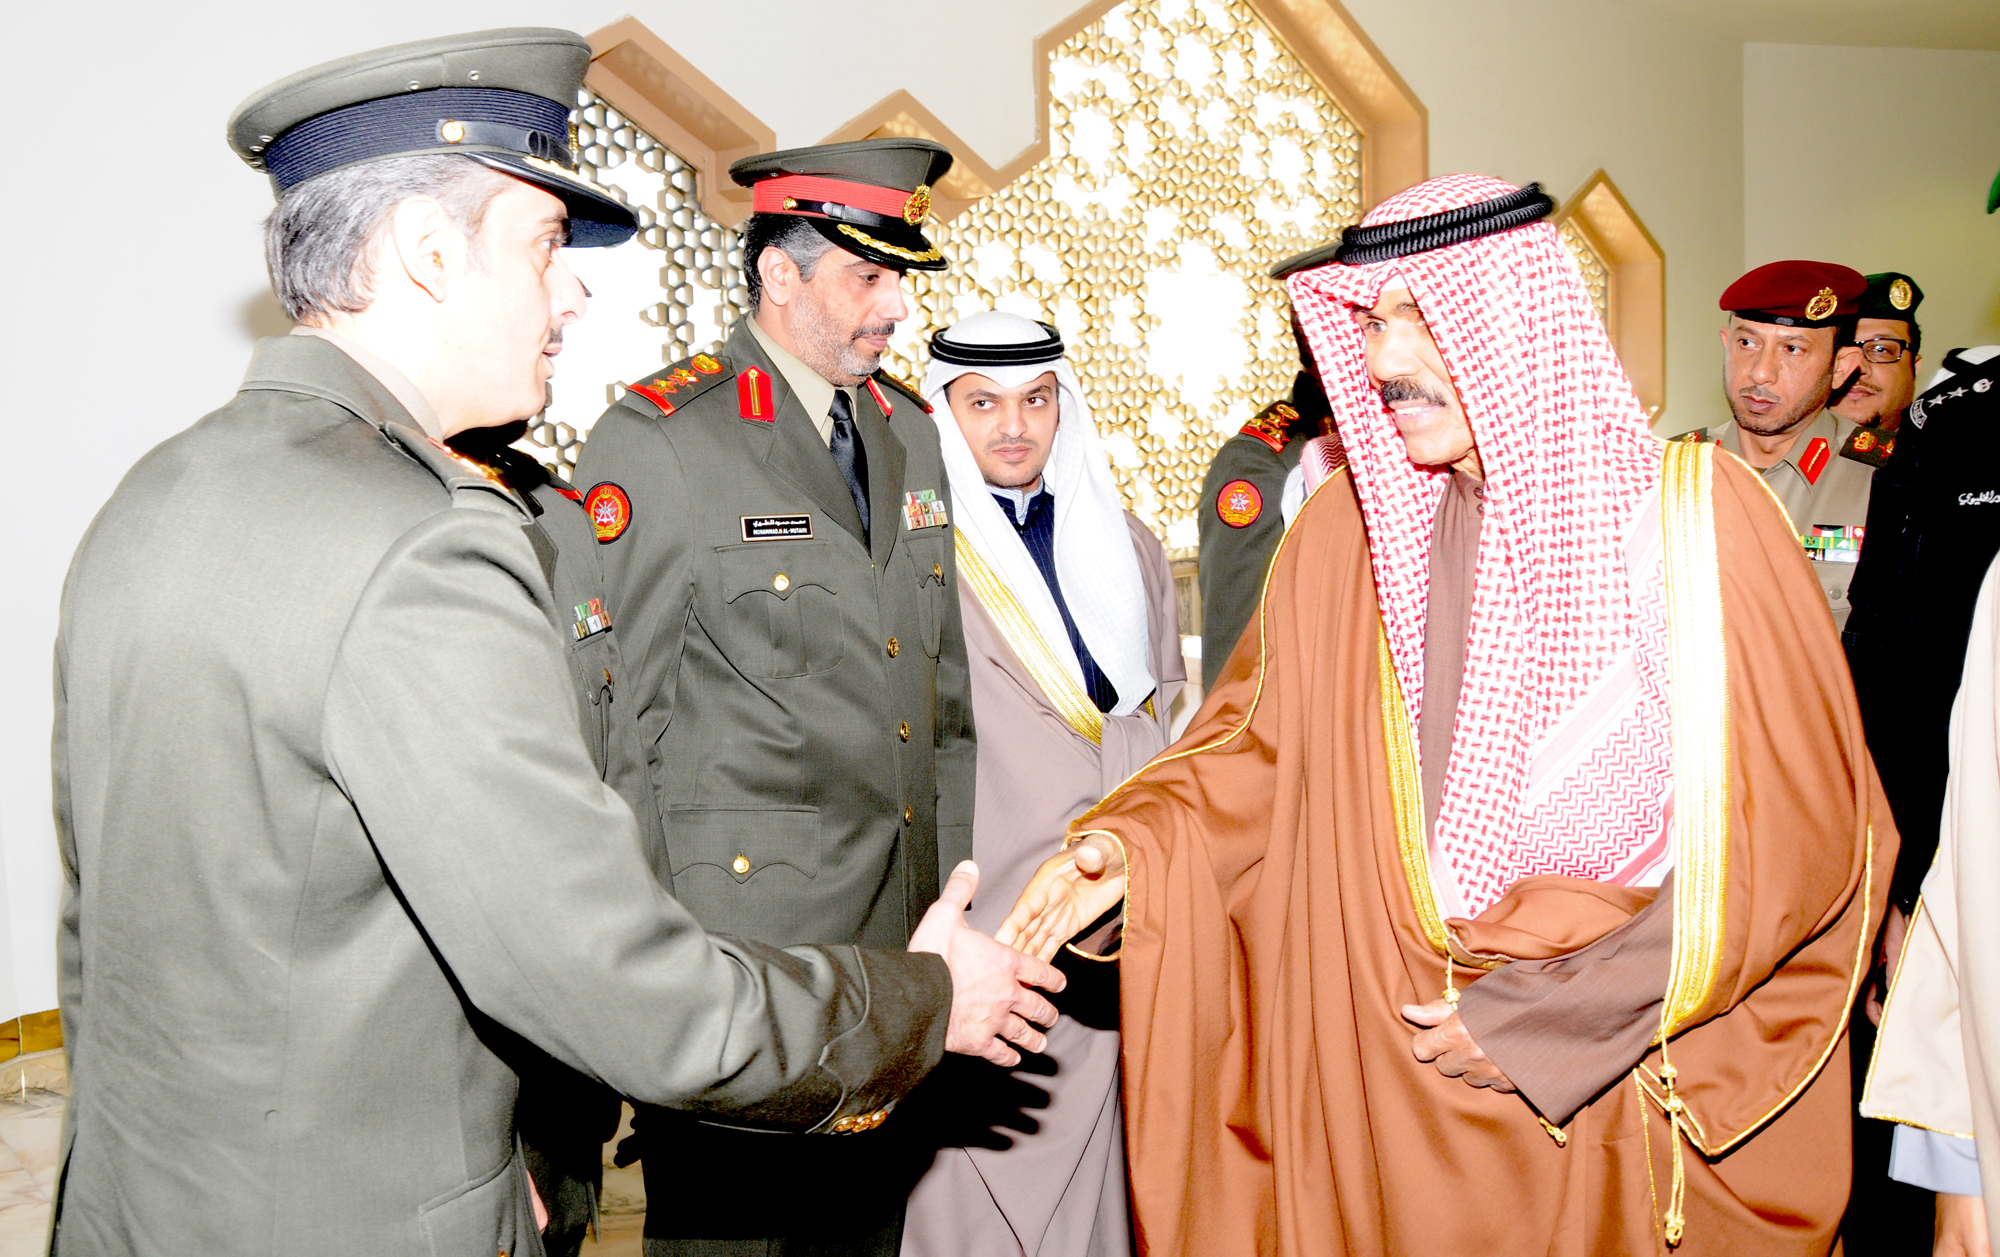 Representative of His Highness the Amir Sheikh Sabah Al-Ahmad Al-Jaber Al-Sabah, His Highness the Crown Prince Sheikh Nawaf Al-Ahmad Al-Jaber Al-Sabah arrives in Riyadh